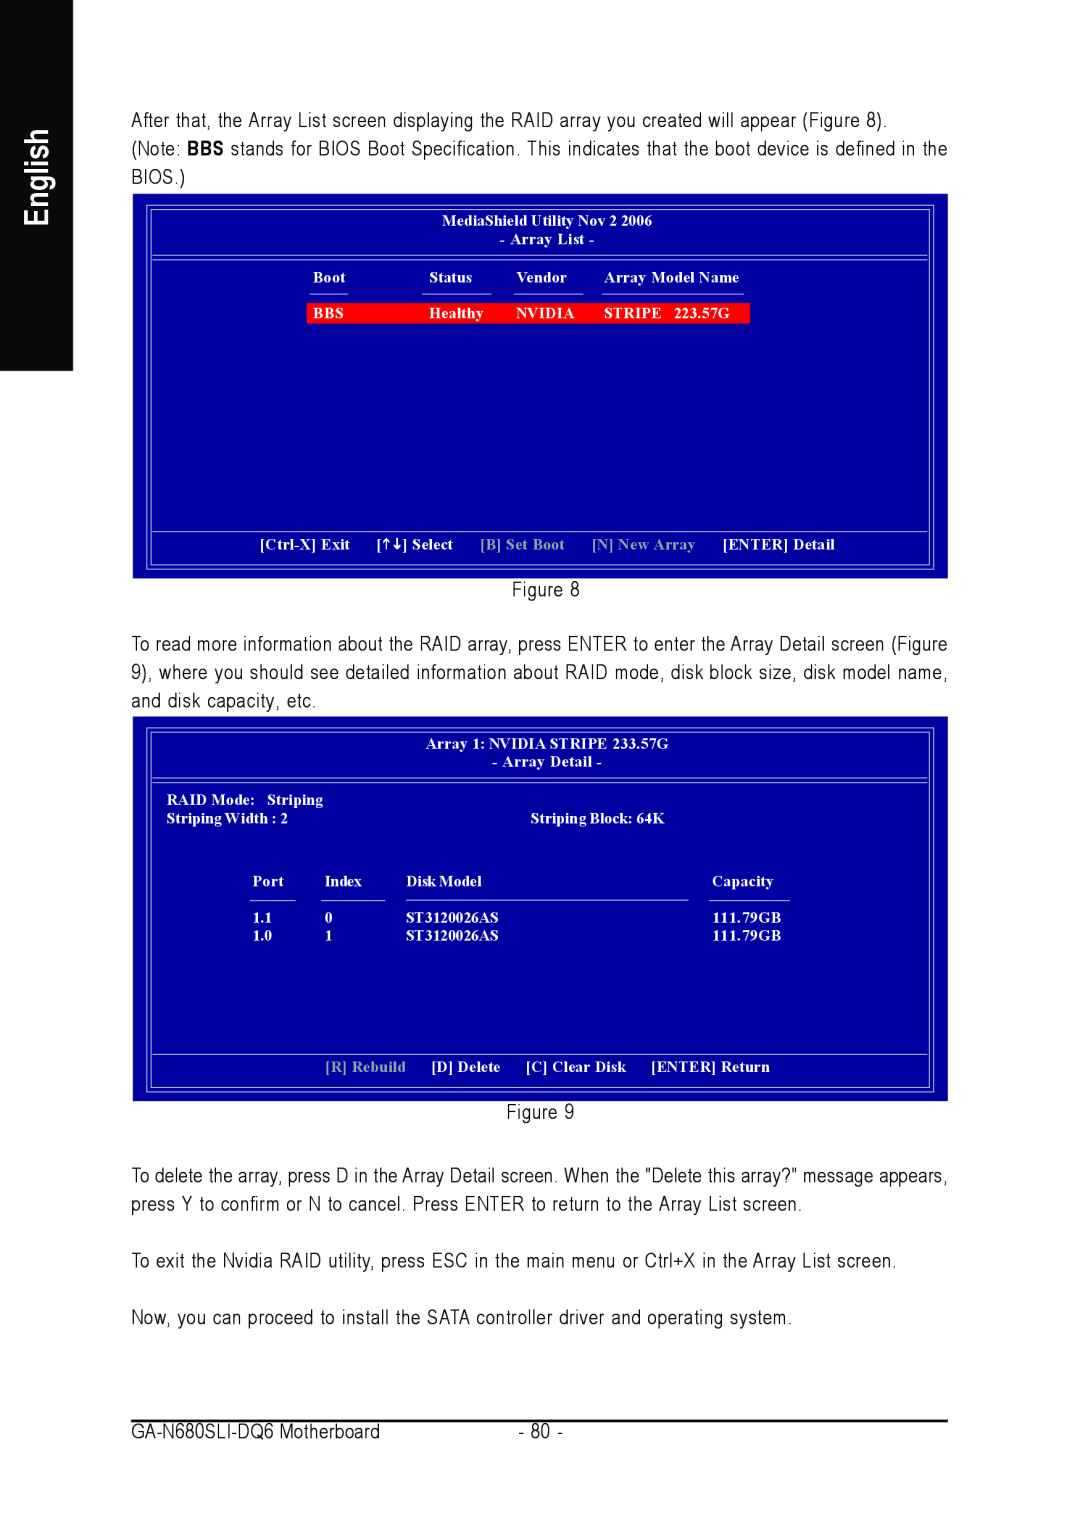 Intel GA-N680SLI-DQ6 user manual English, B Set Boot, N New Array ENTER Detail, R Rebuild 